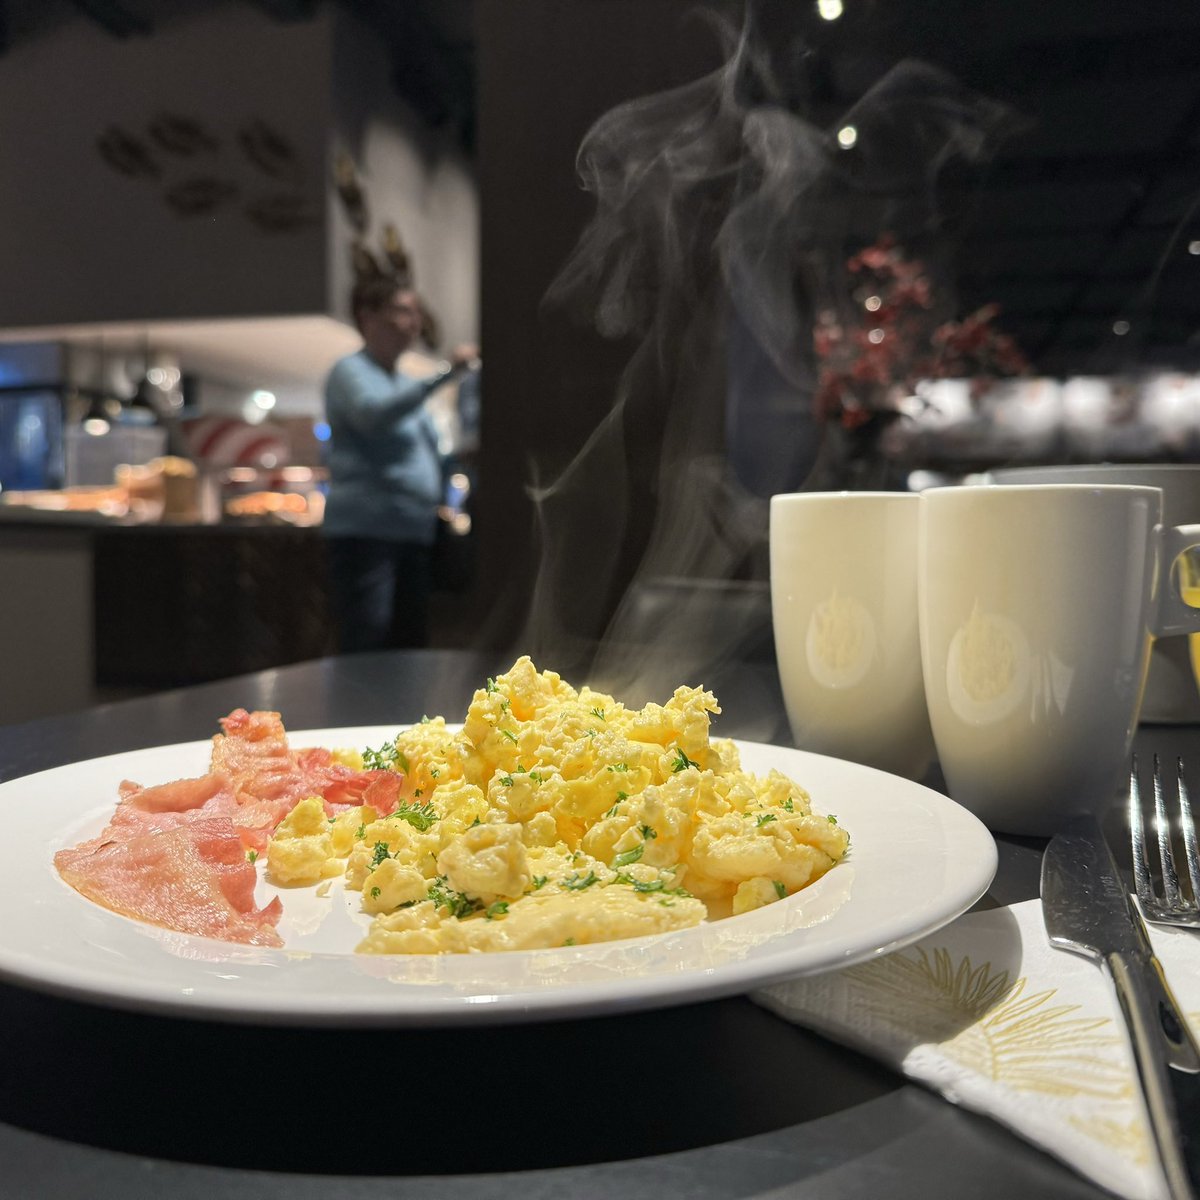 #hotelontbijtje...
Yikes! ei met ‘groene dingetjes’…
Straks is’t nog gezond!! 😳

#myview #hotel #vanderValk #vanderValkhotel #hotelAmersfoort #Amersfoort
. 
#food #foodporn #foodgasm #foodphotography #breakfast #breakfasttime #coffee #eggs #scrambledeggs #bacon